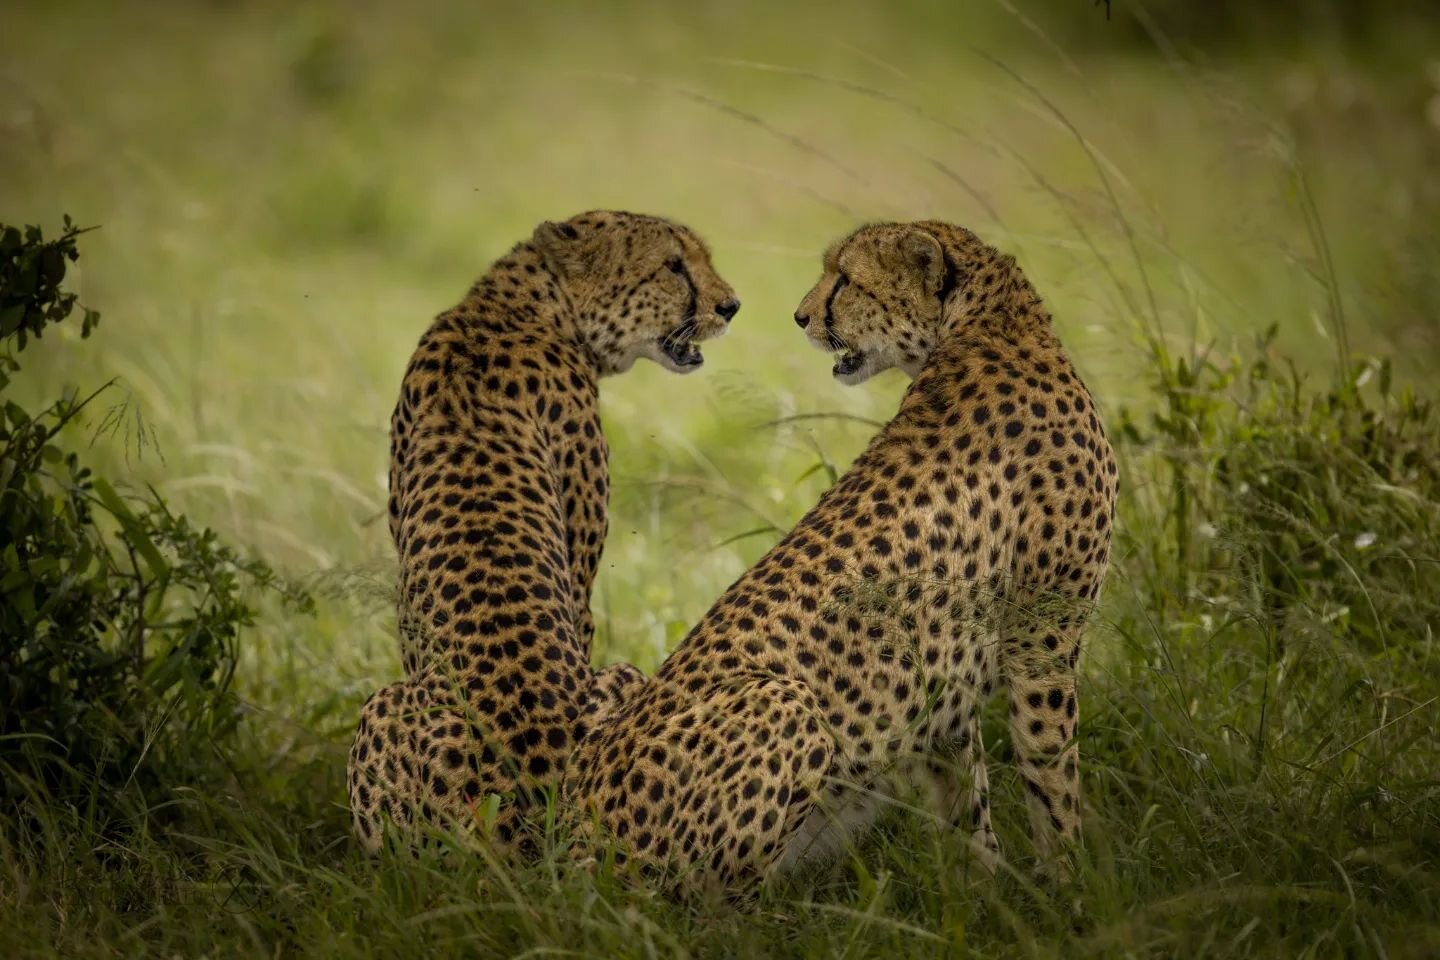 I simply love Masai Mara 🥰

#gepard
#cheetah 
#masaimara 
#masaimaranationalpark 
#kenya 
#canonnordic 
#canon600mm 
#canonr5
#naturephotography
#animalphotography
#wildlife